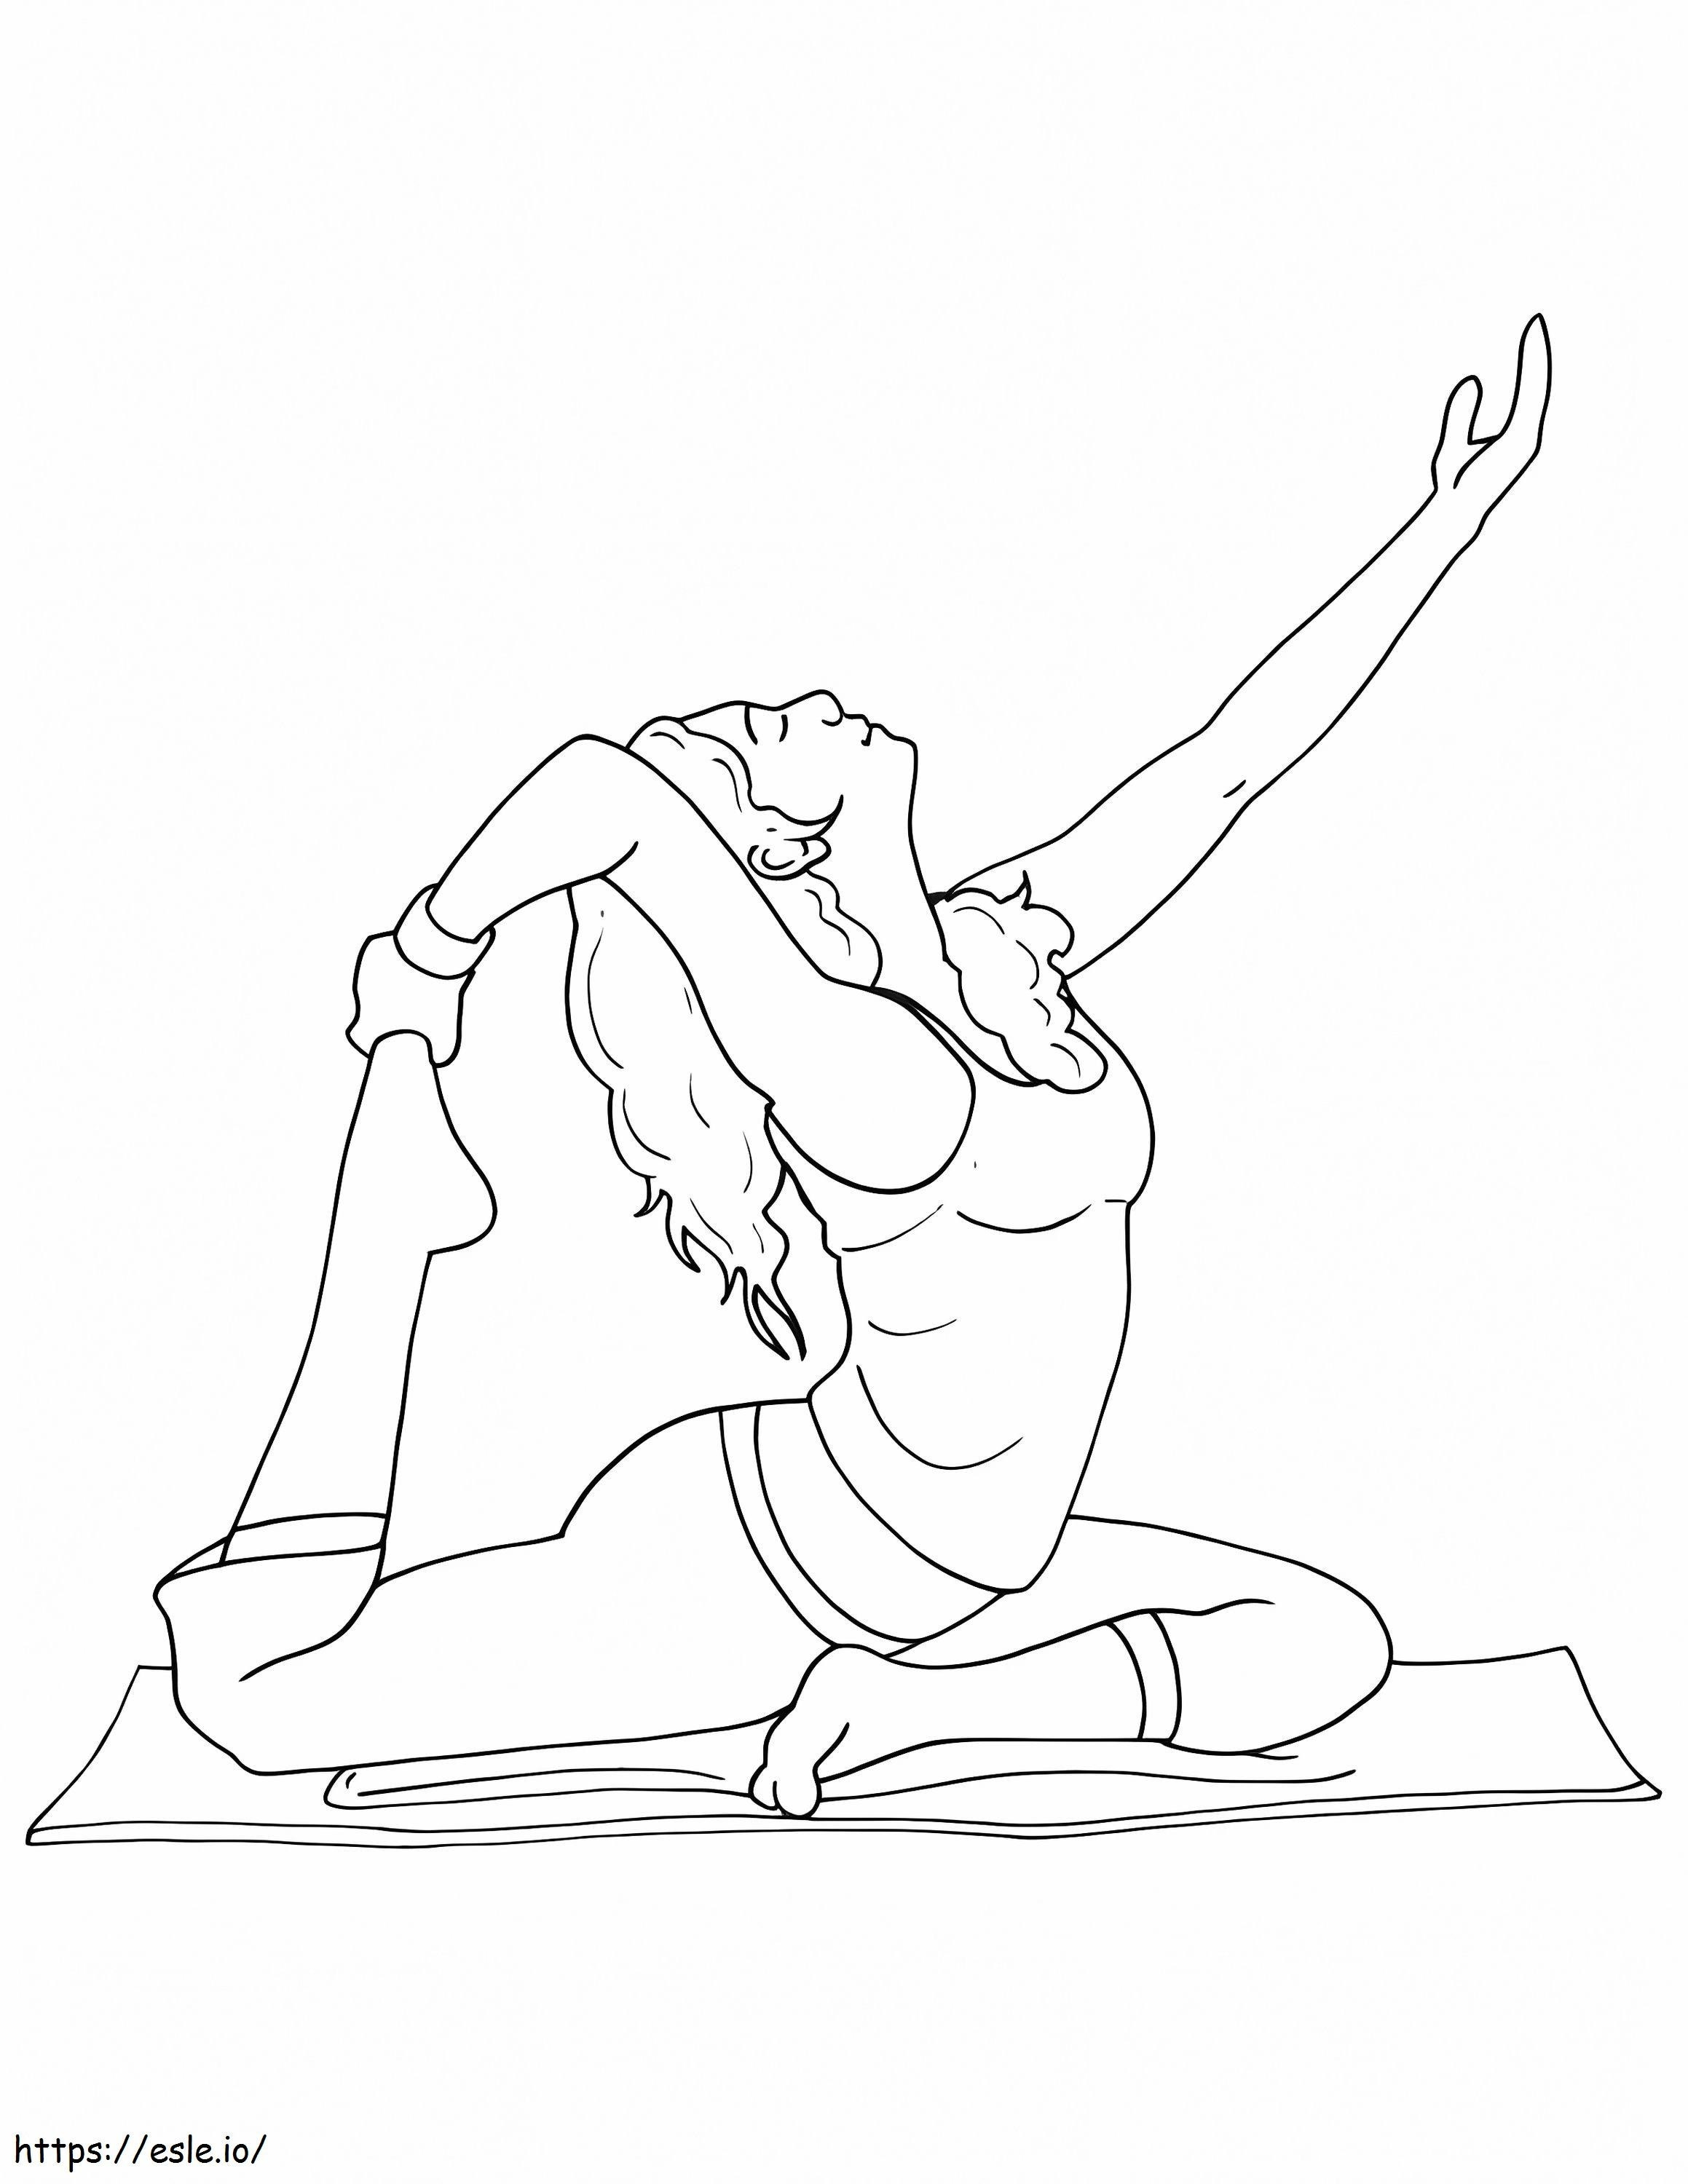 Yoga ausdrucken ausmalbilder